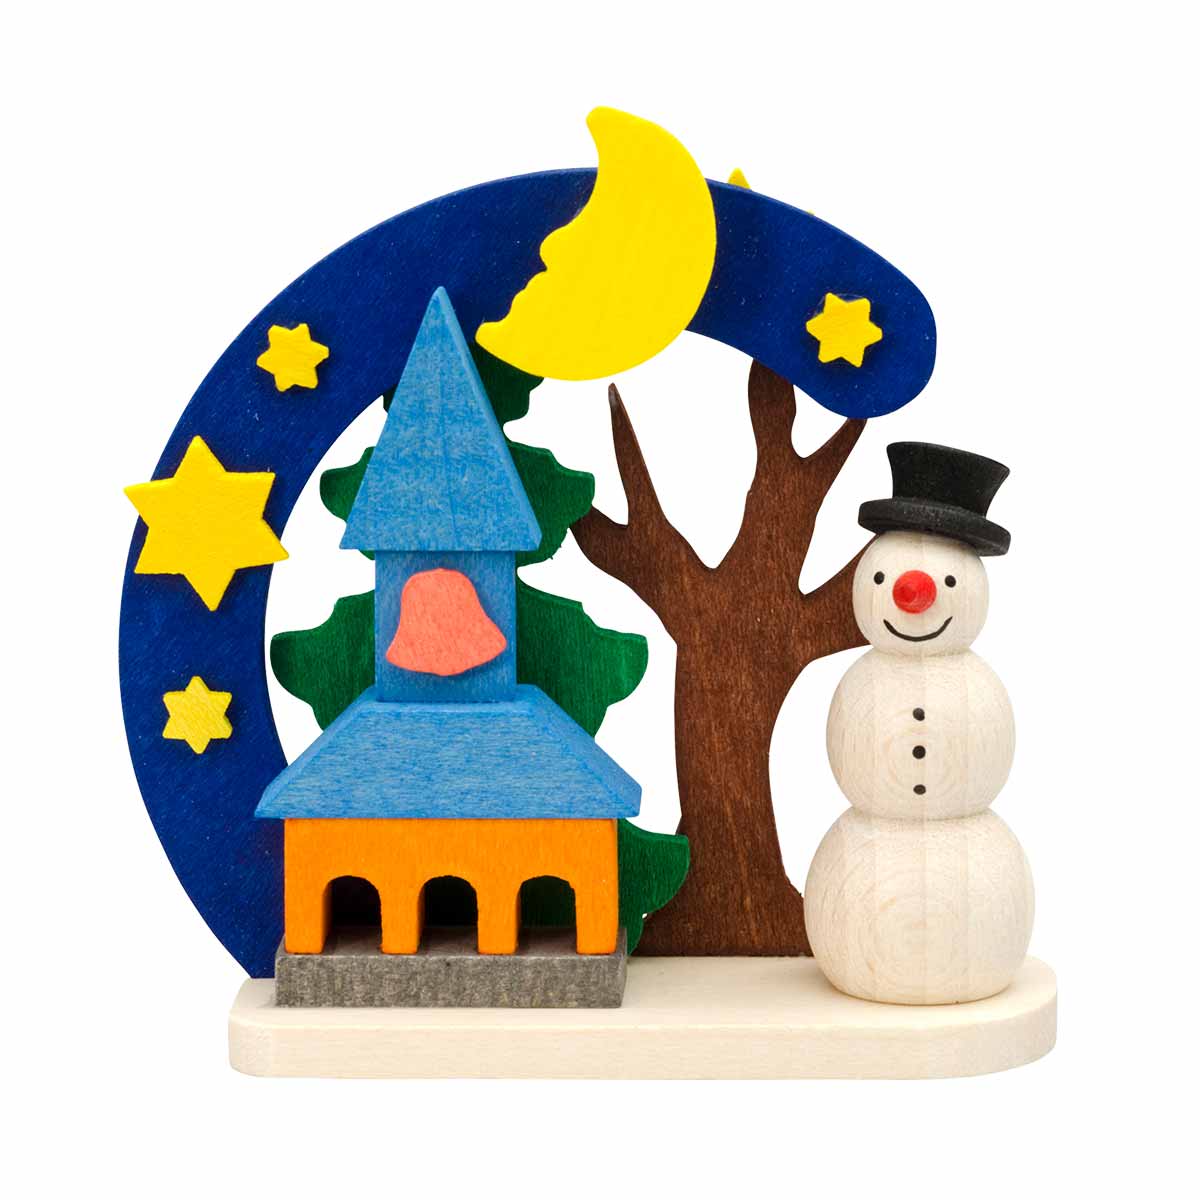 Snowman Under Star Arch Ornament by Graupner Holzminiaturen